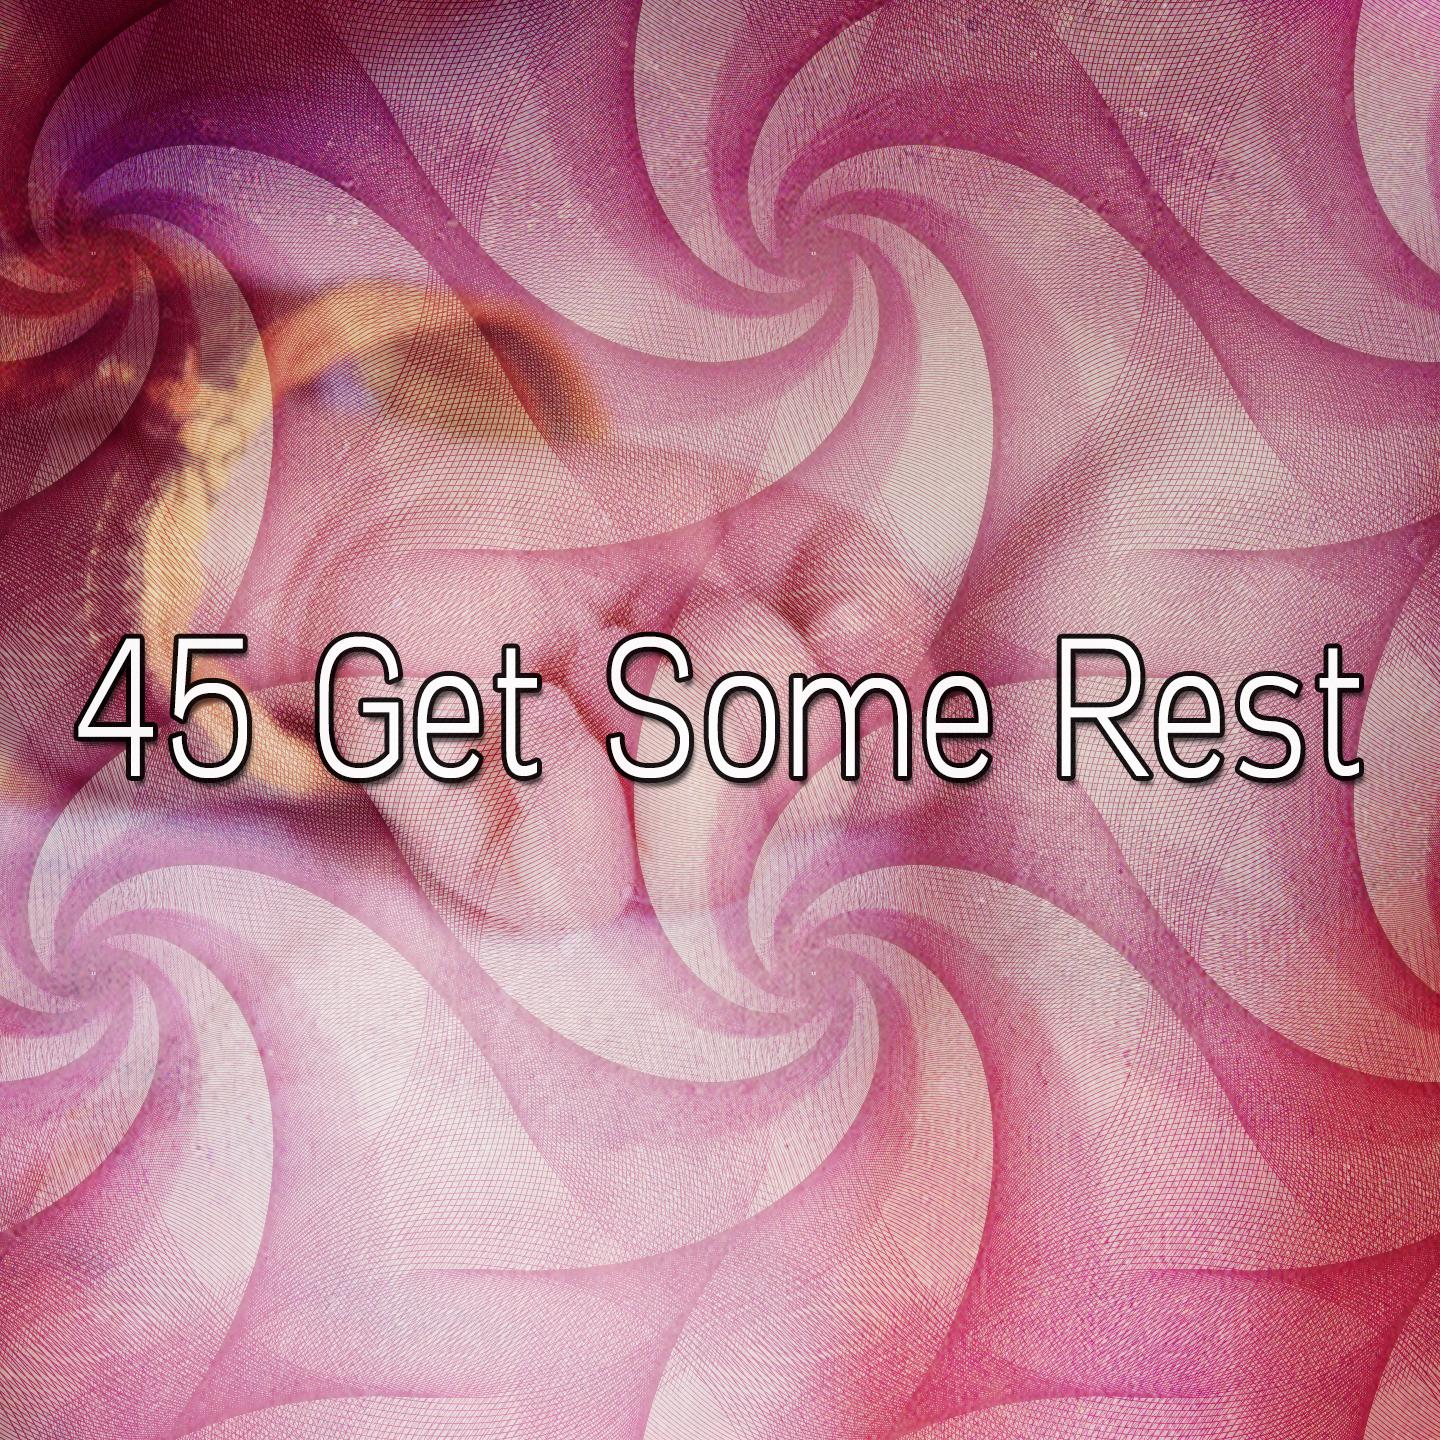 45 Get Some Rest